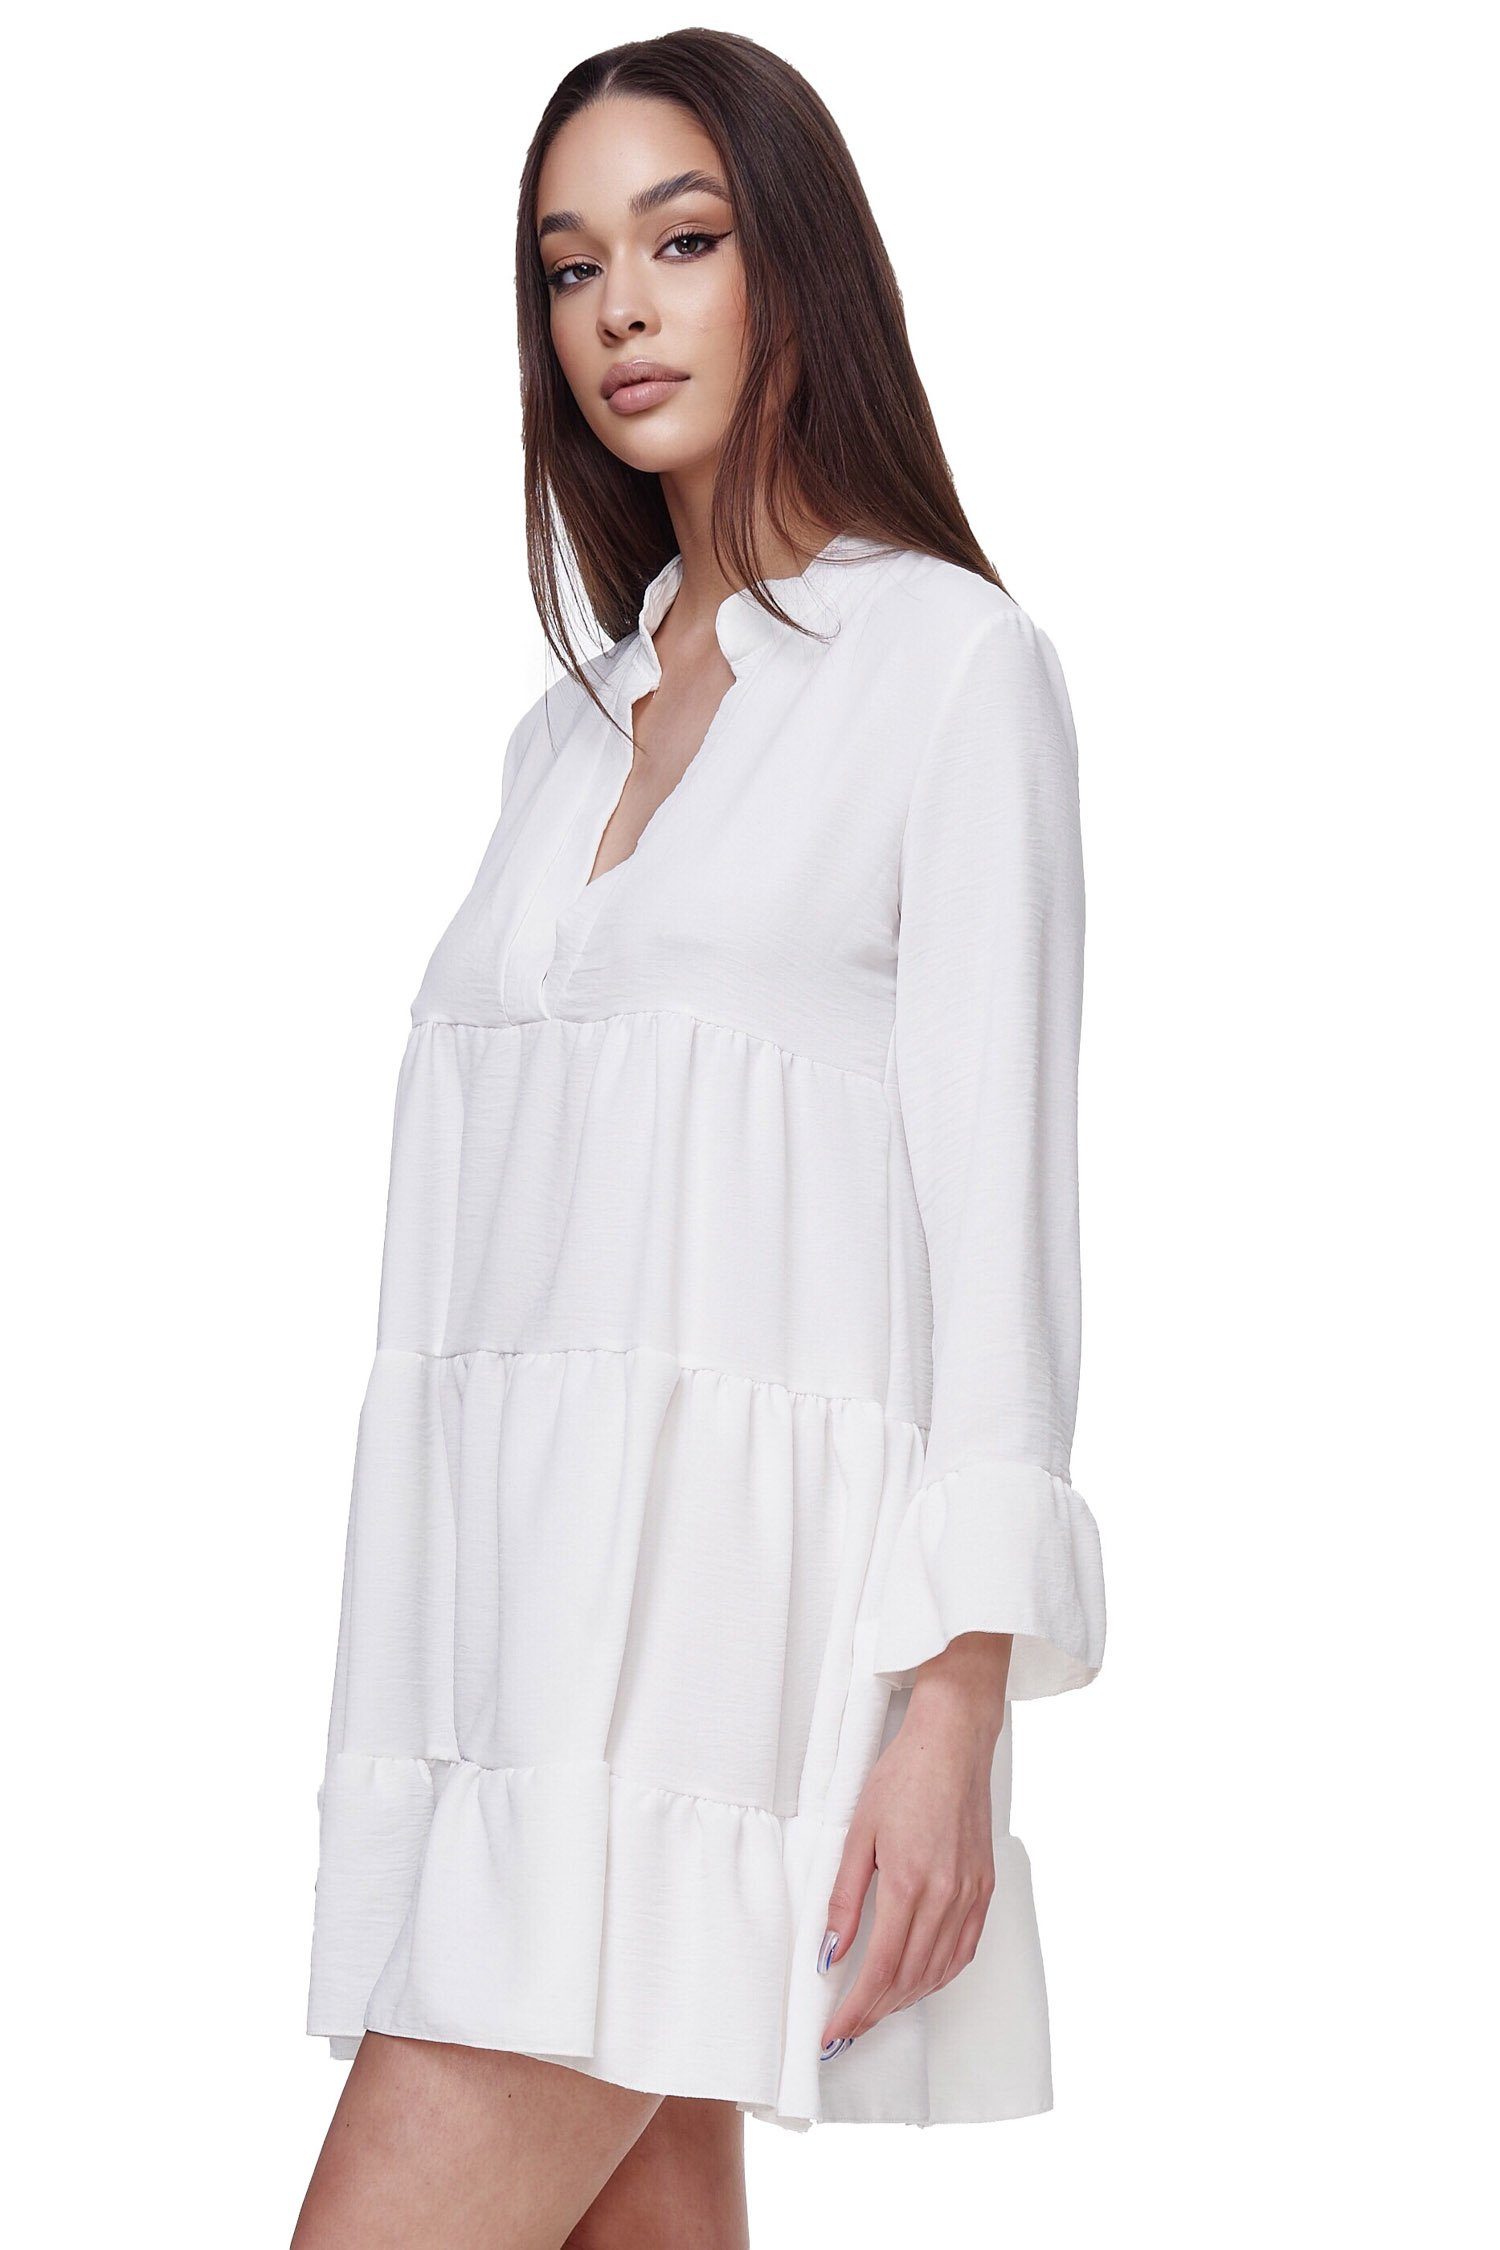 Rayshyne Minikleid RS-04 (Midi Tunika Sommer Kleid mit Rüschen) Weiß